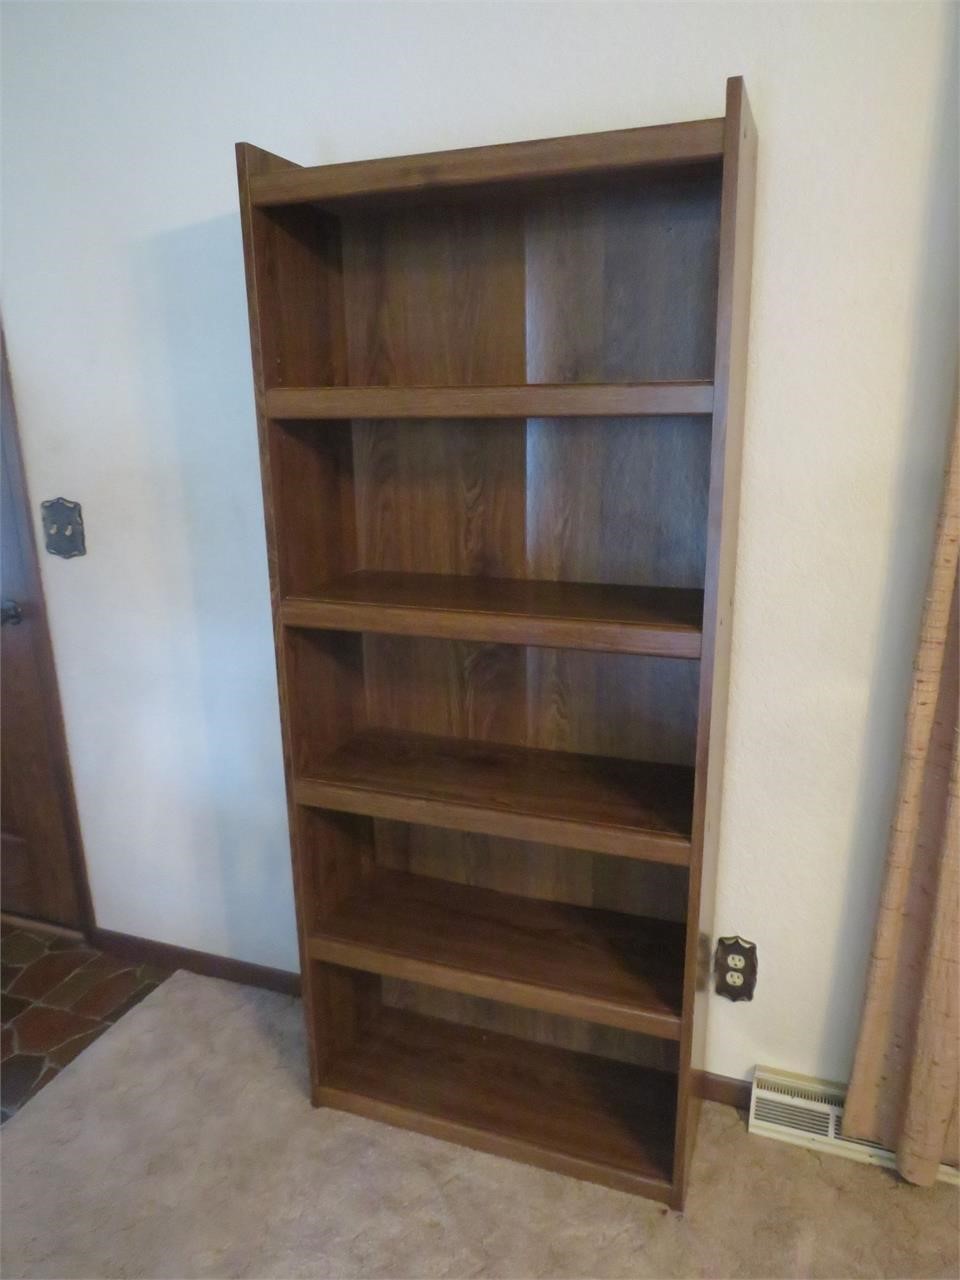 6-Tier Book Shelf with Adjustable Shelves